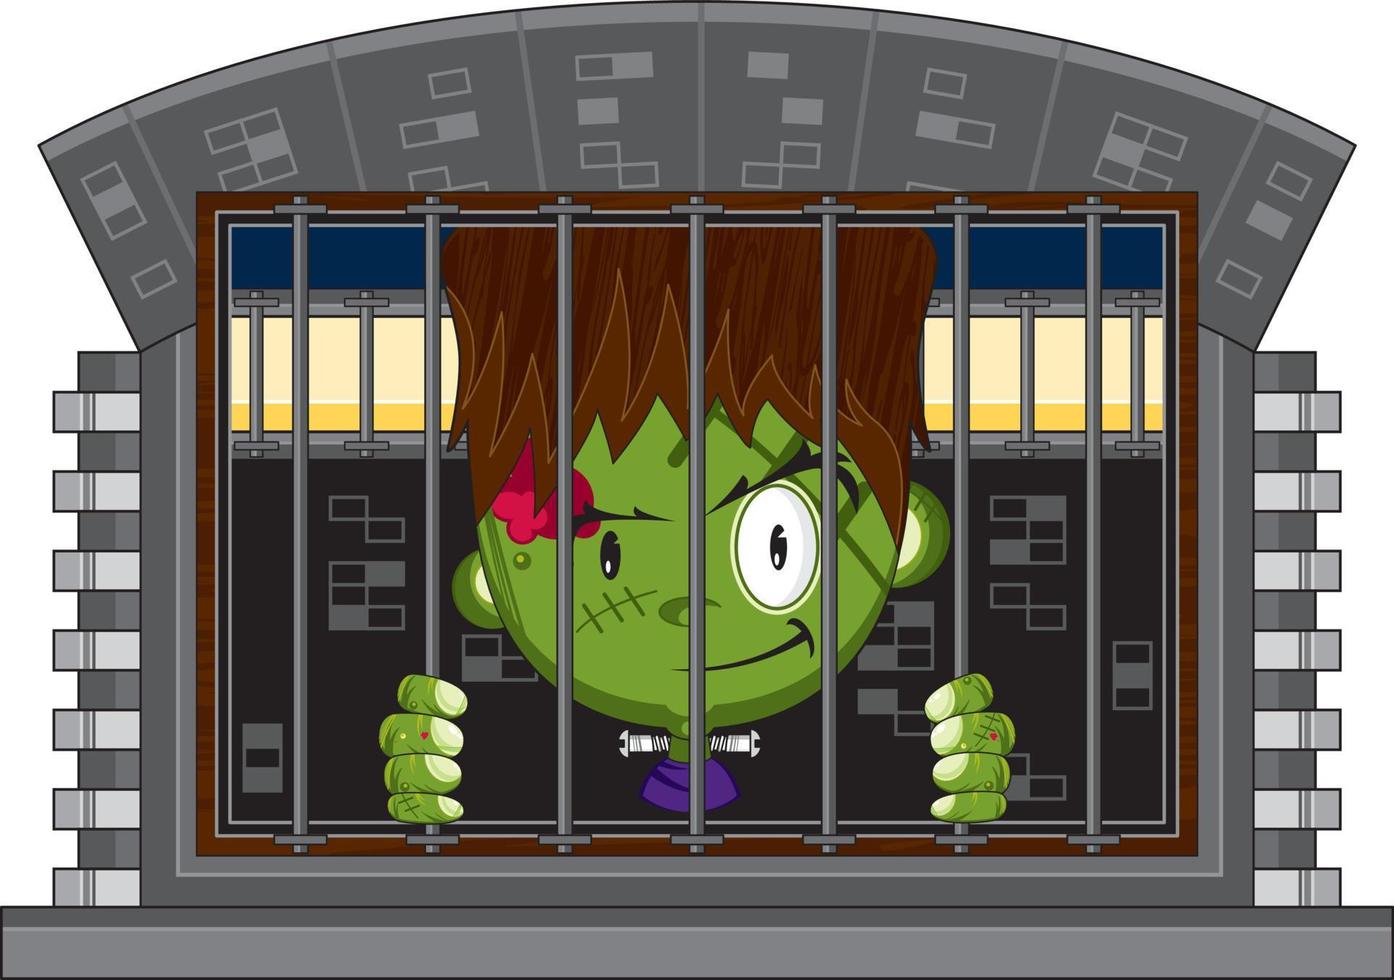 Cartoon Scary Frankensteins Monster in Jail Cell - Spooky Halloween Illustration vector